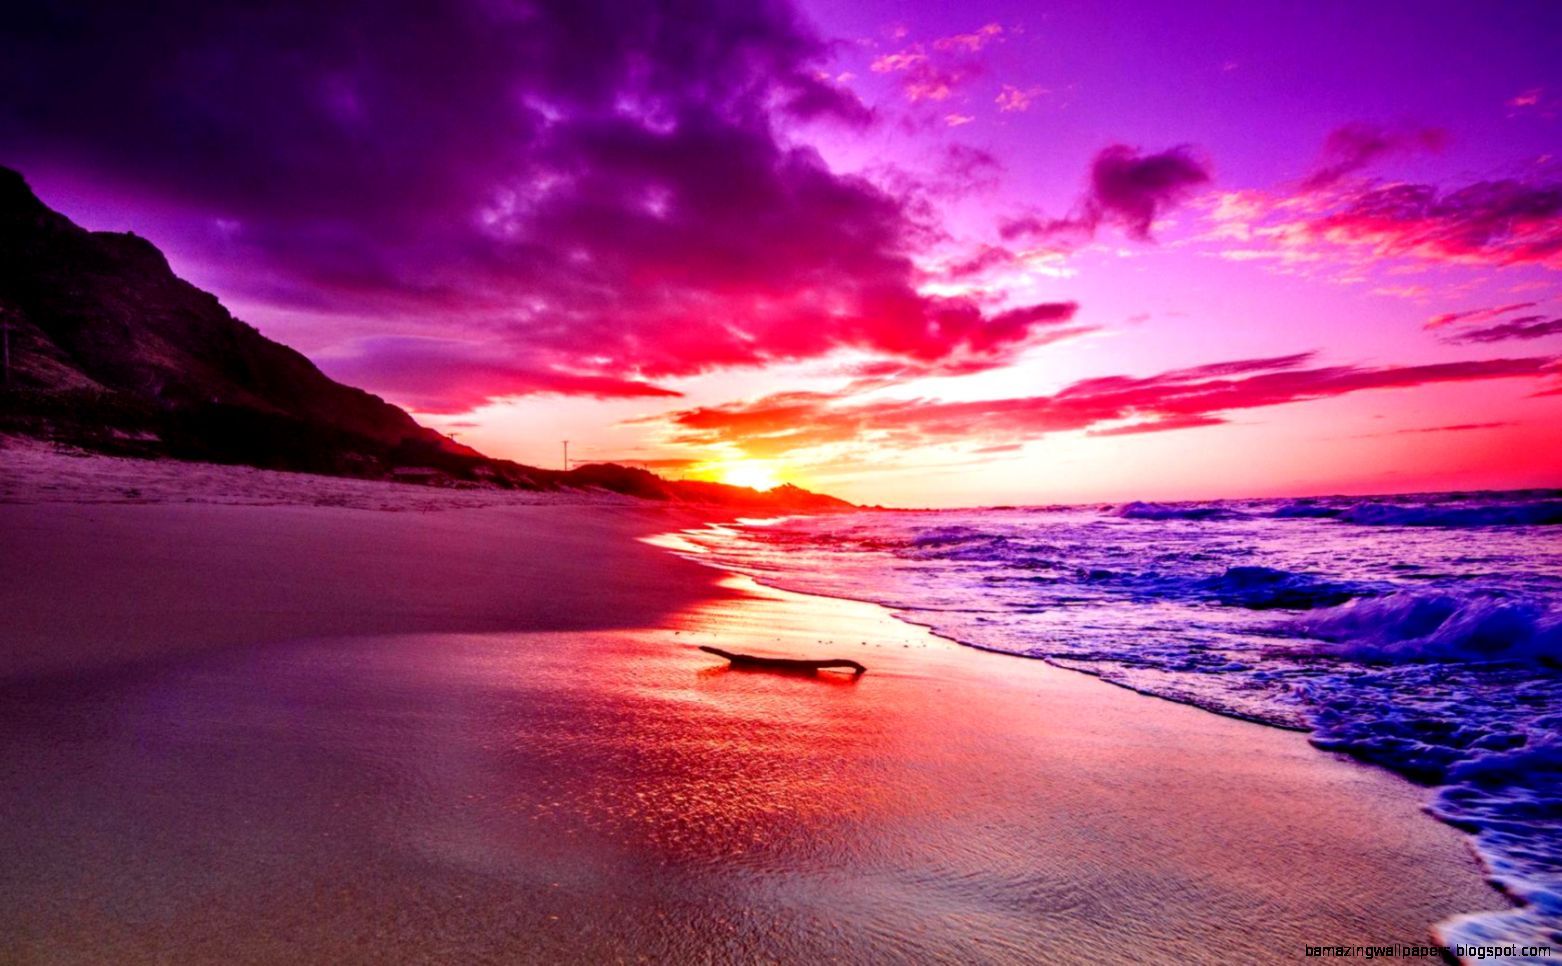 Purple Beach Sunset Wallpapers - Wallpaper Cave